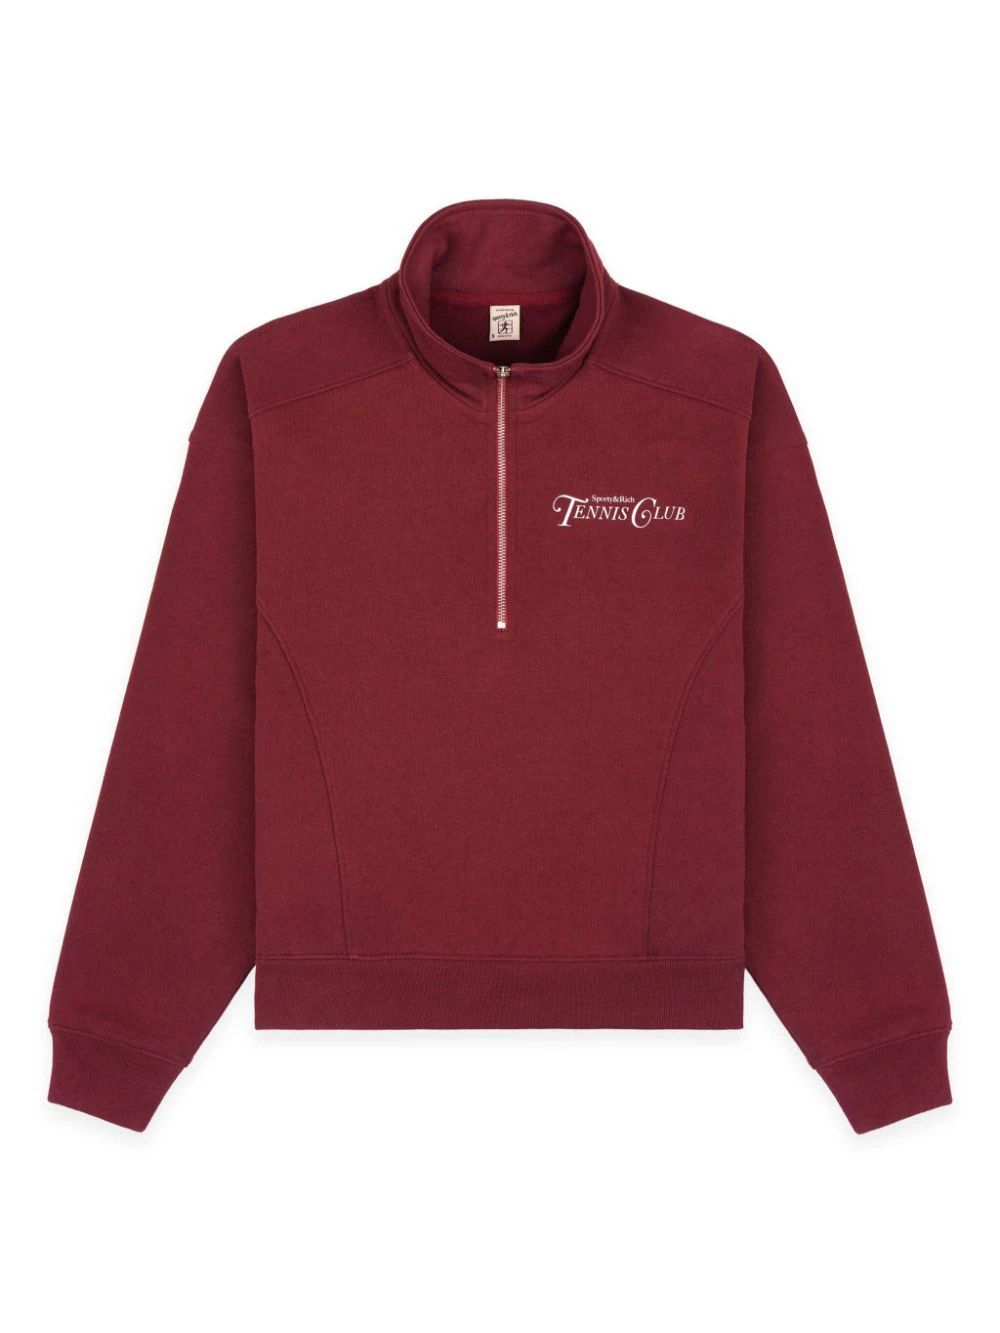 The DetailsSporty & RichRizzoli Tennis cotton sweatshirtMade in United StatesHighlightswine red c... | Farfetch Global